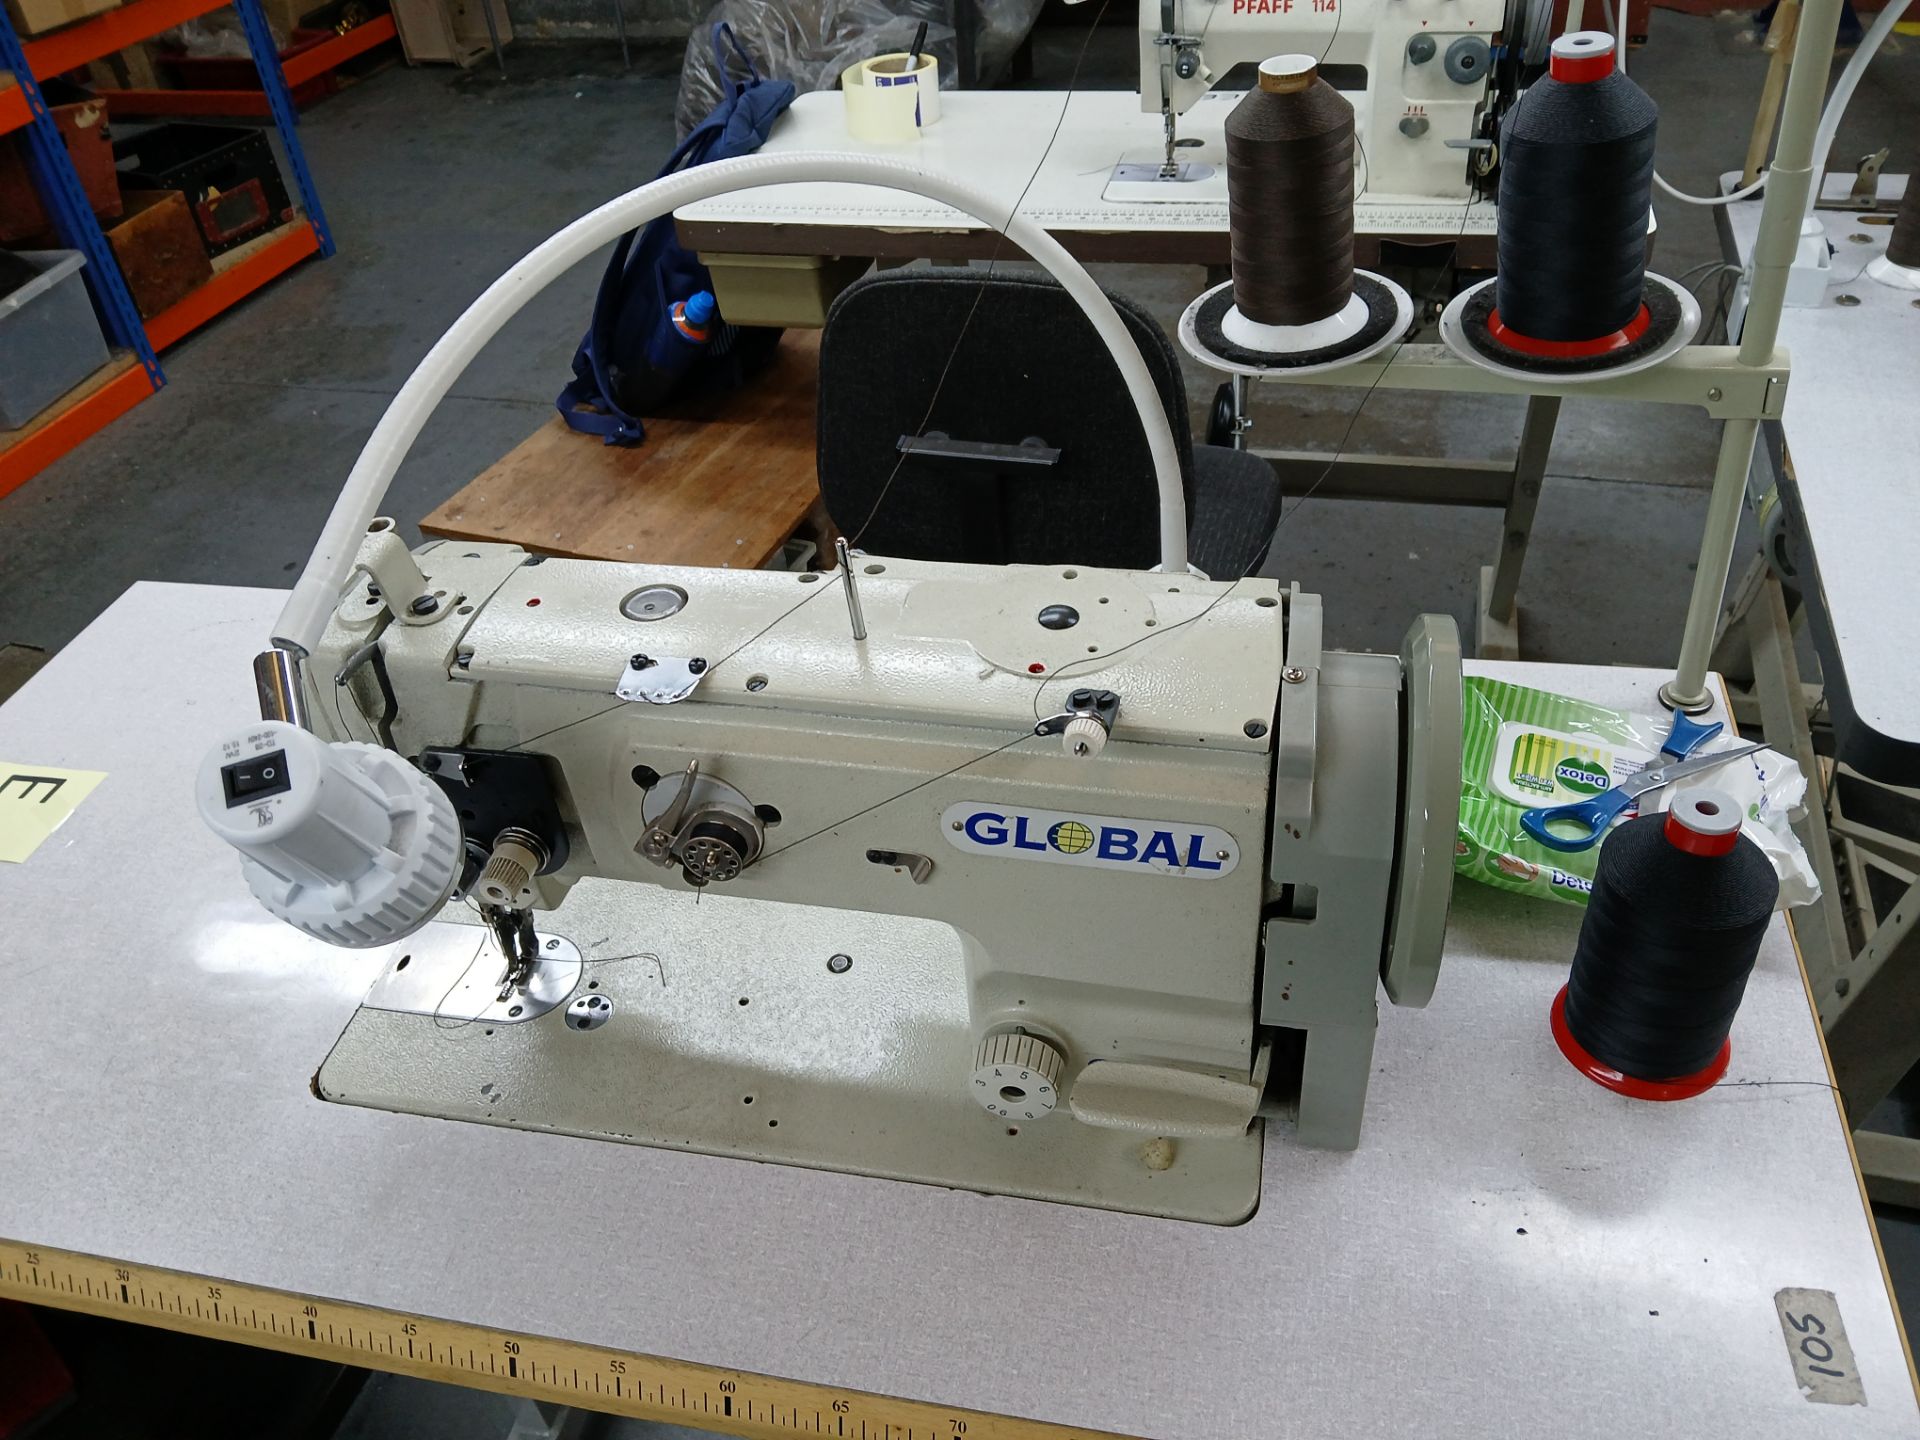 Global WF5555LH industrial sewing machine - Image 2 of 3